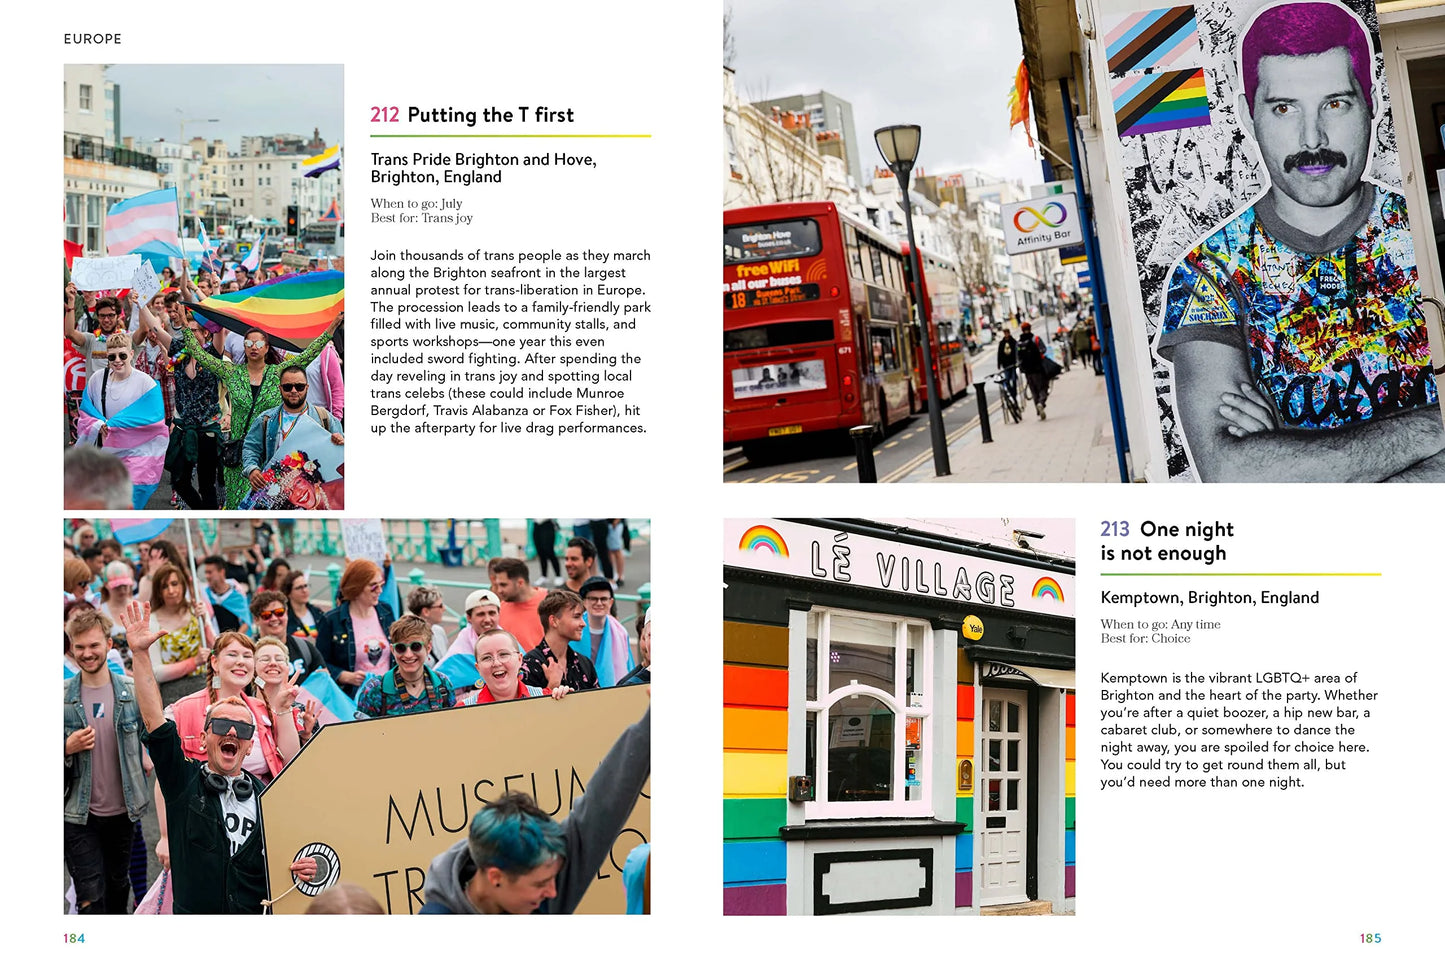 Pride Atlas: 500 Iconic Destinations for Queer Travelers